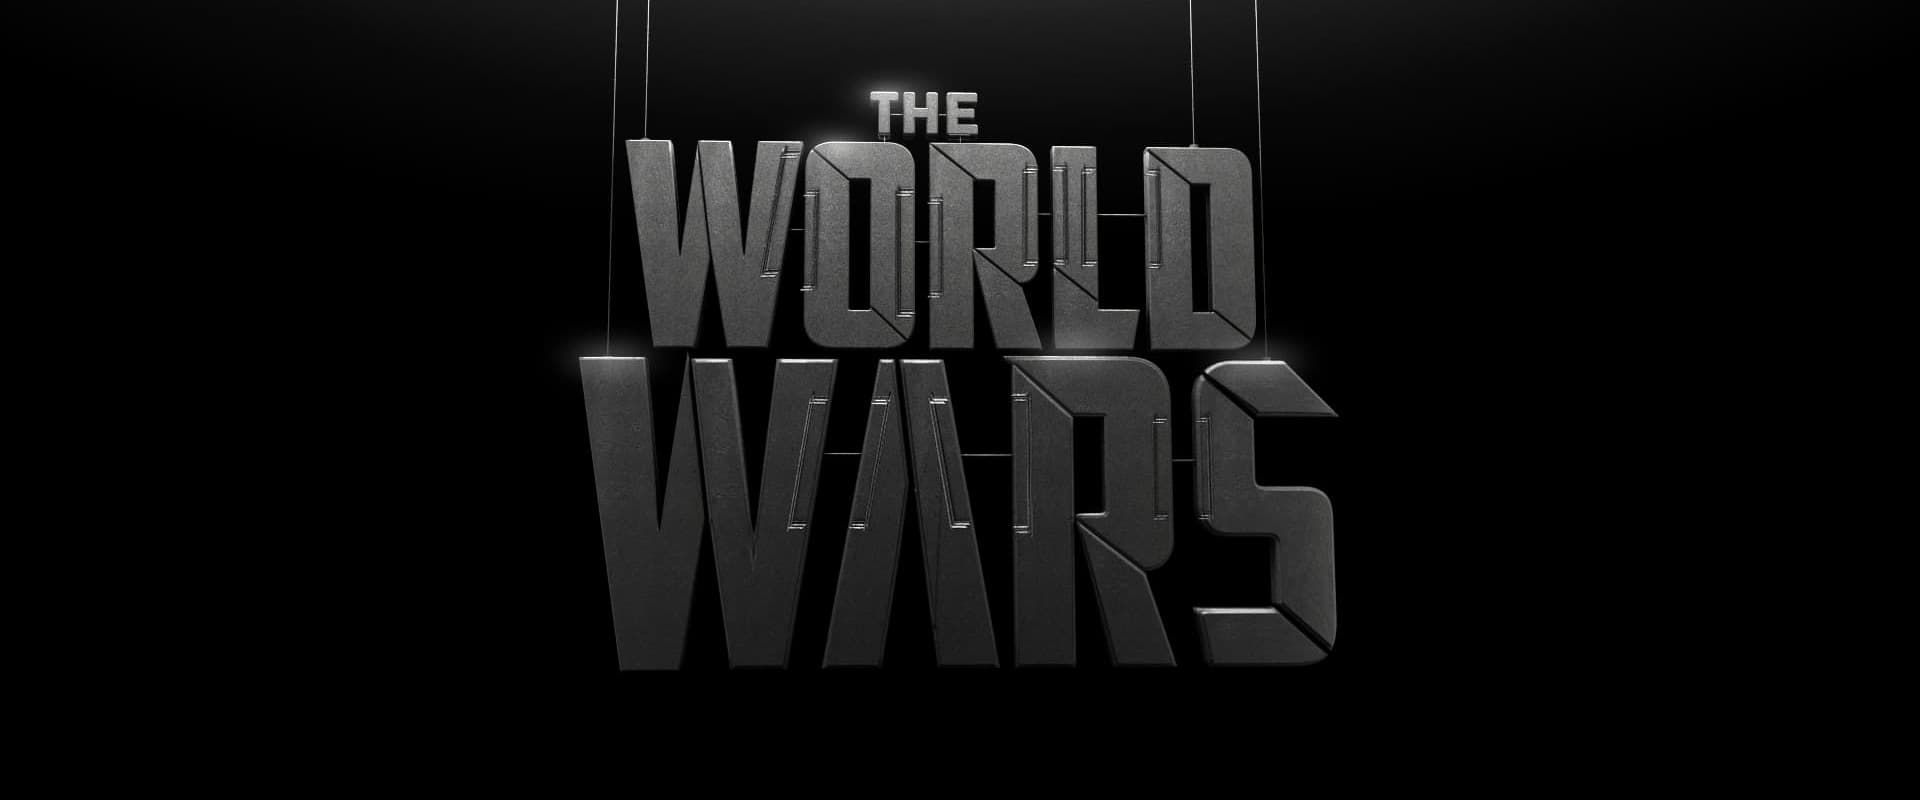 As Guerras Mundiais